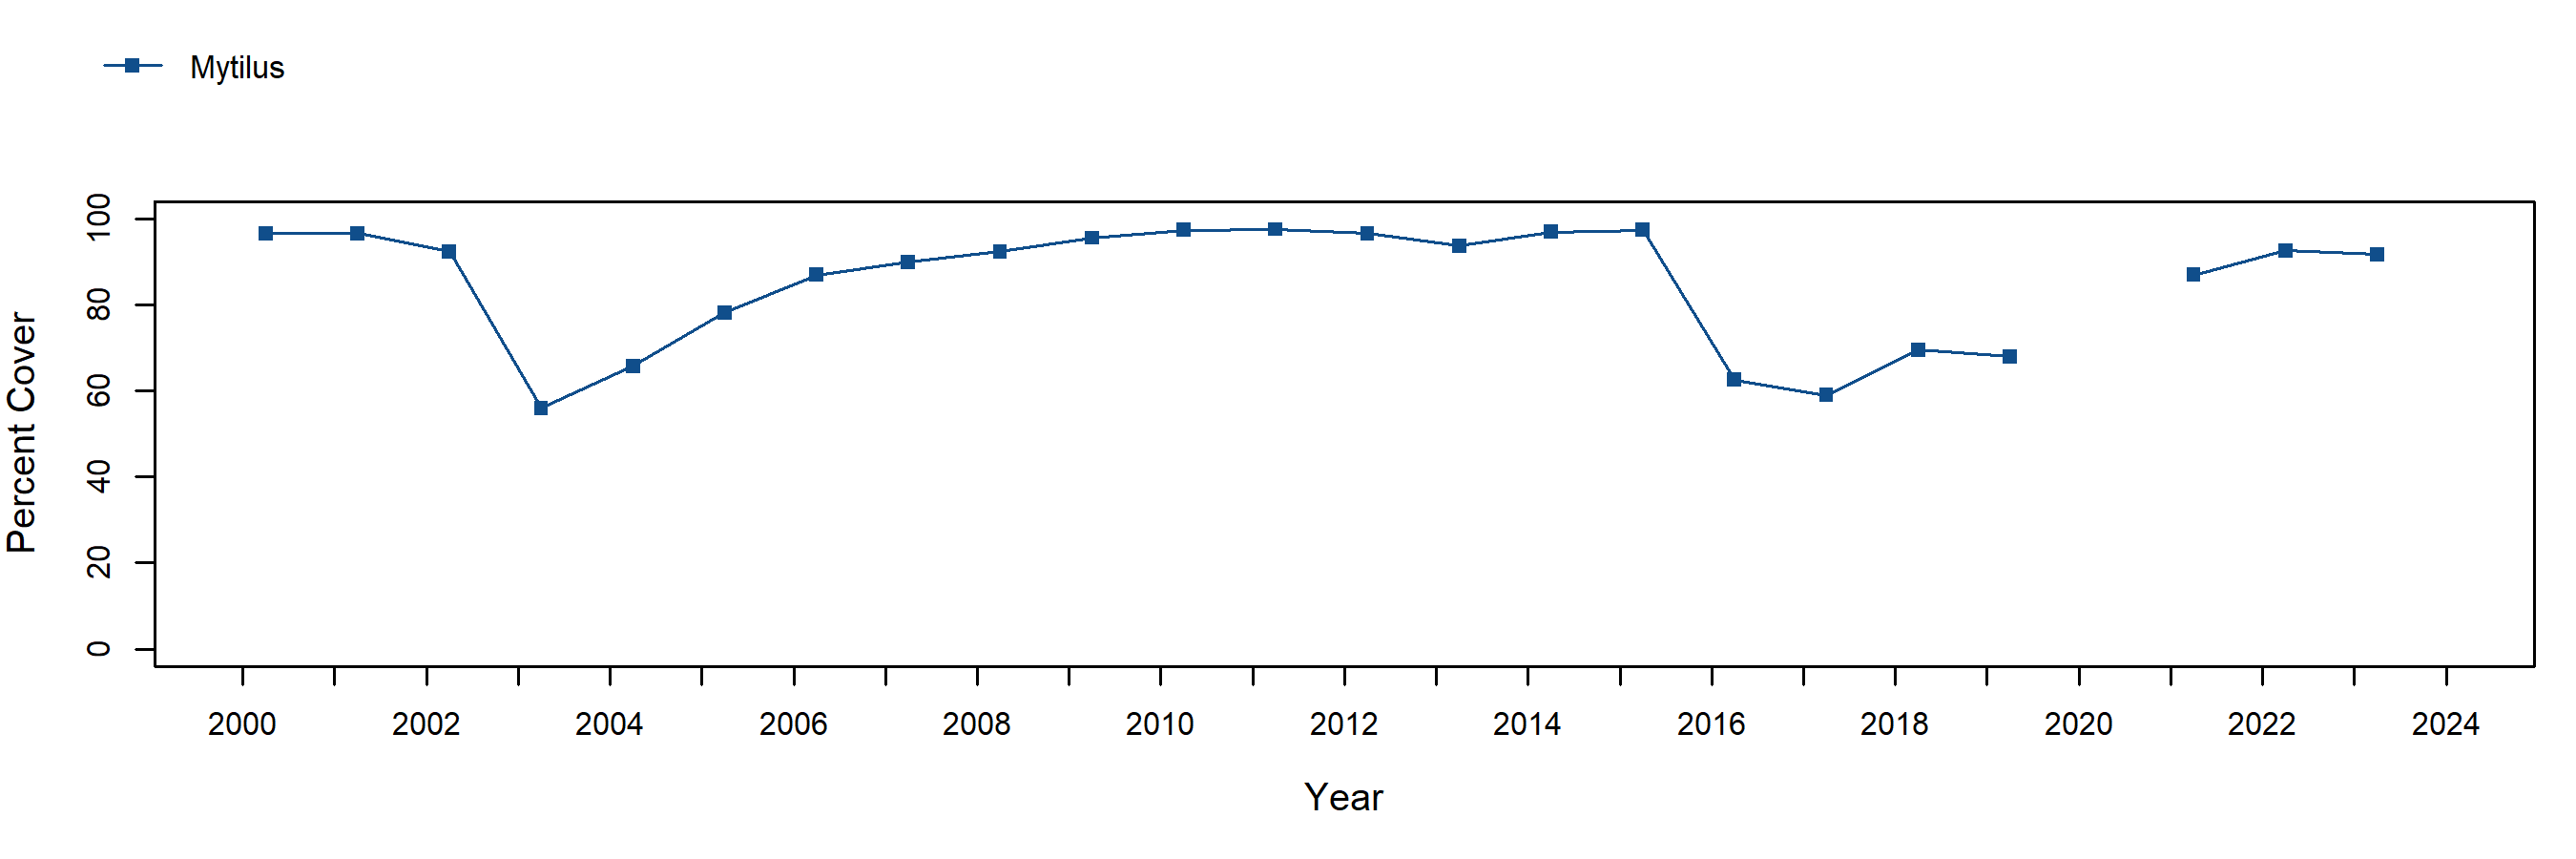 Bob Creek Mytilus trend plot